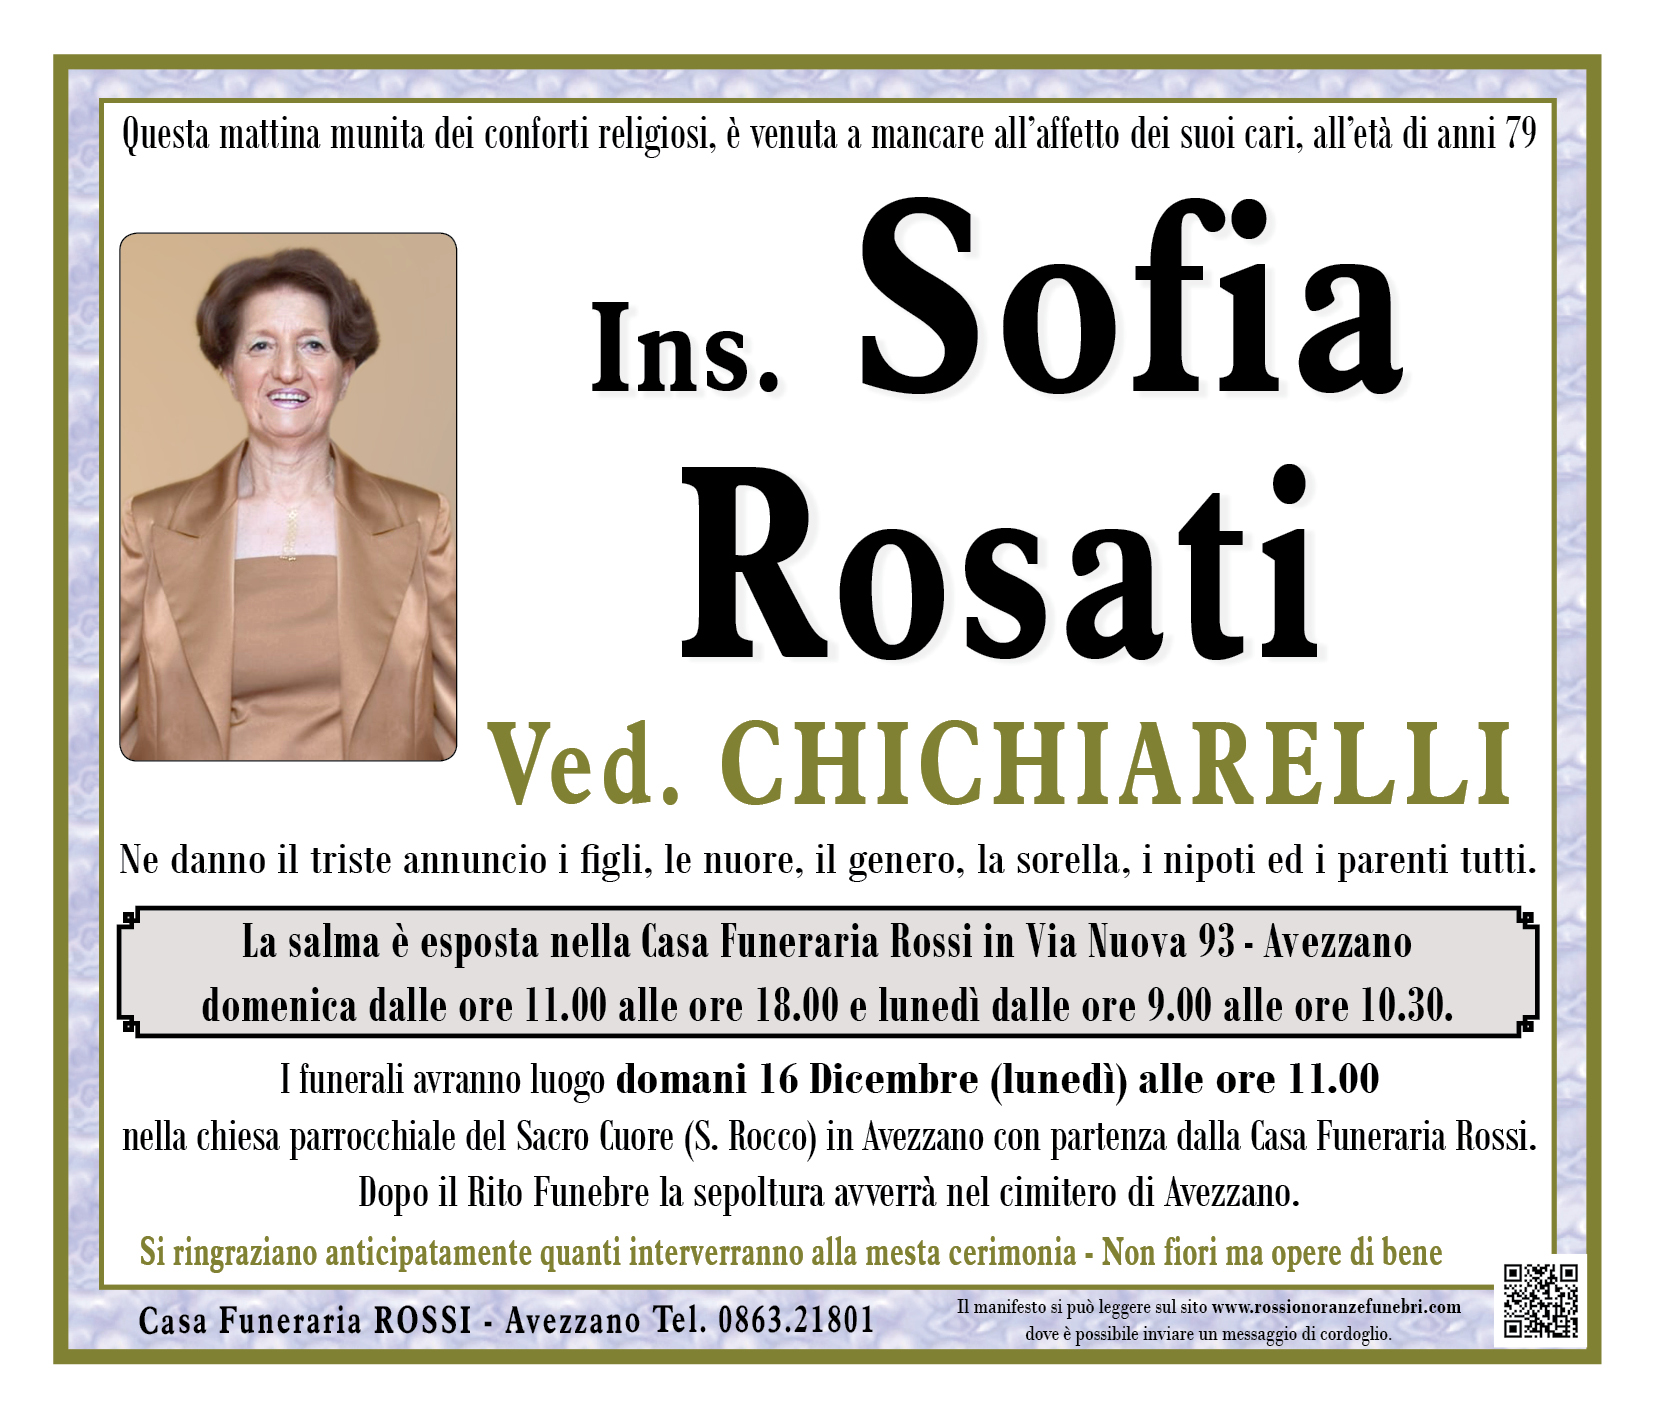 Sofia Rosati